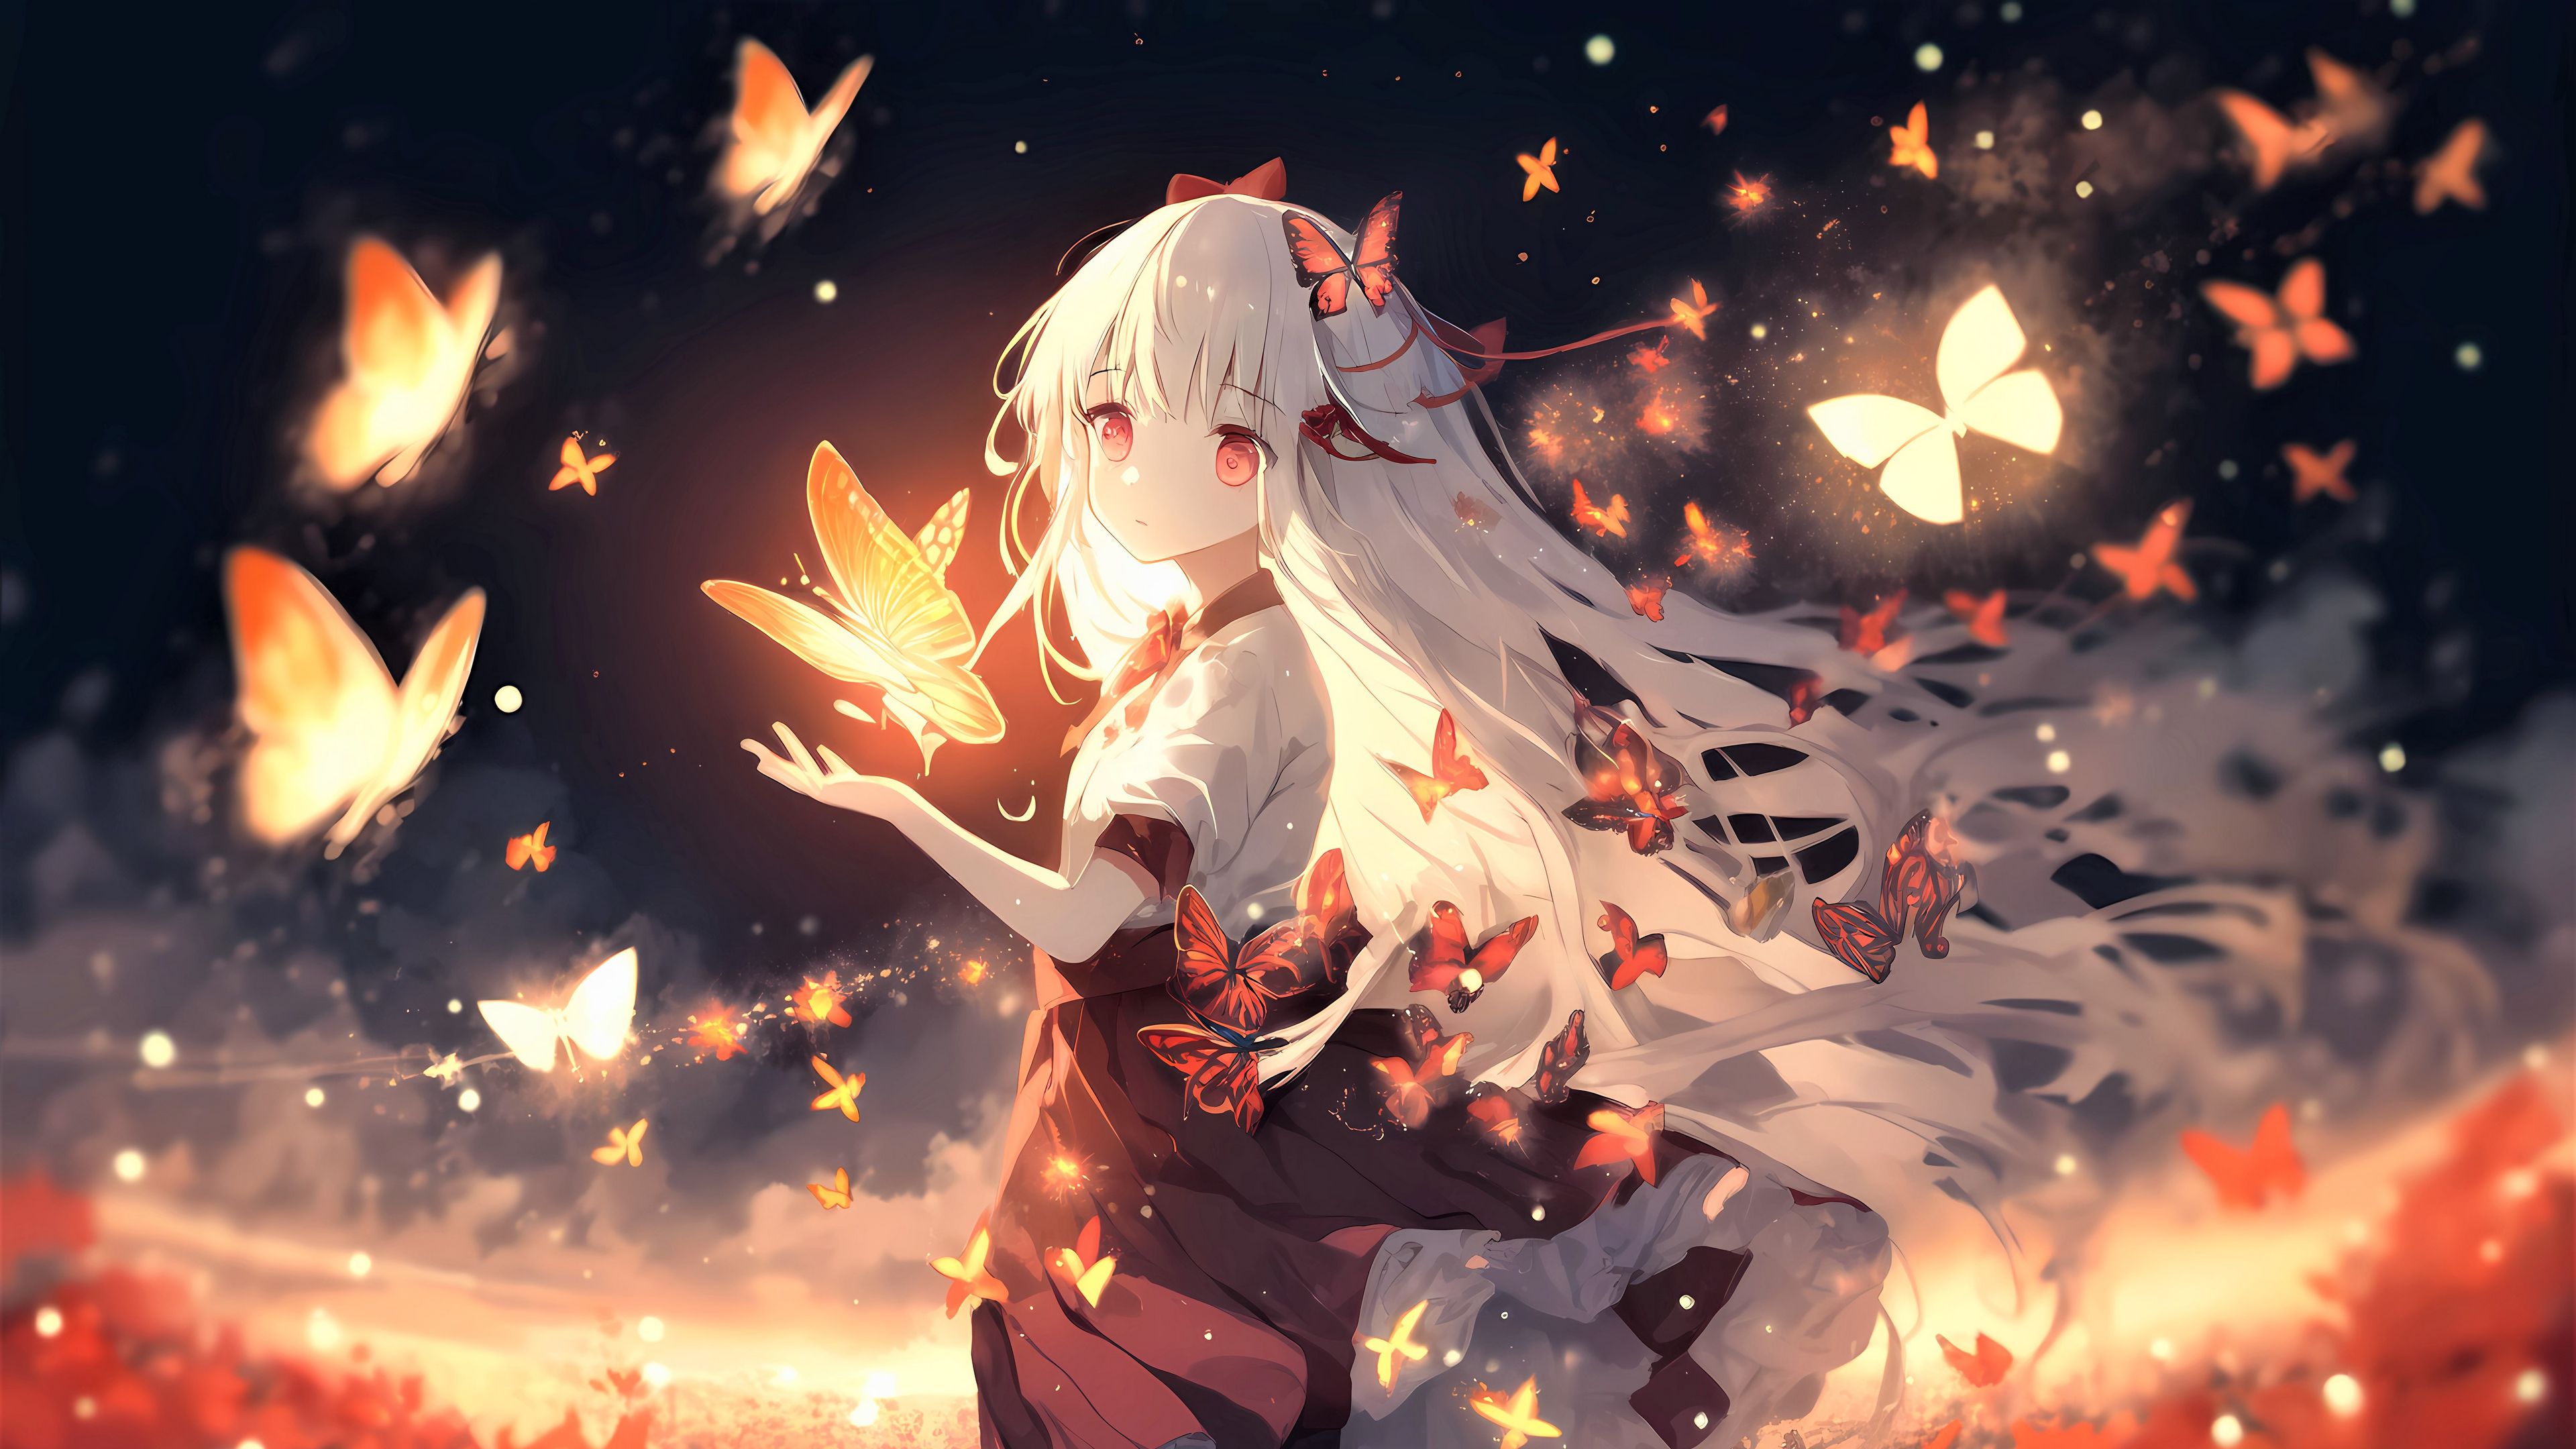 Download wallpaper 3840x2160 girl, butterflies, glow, anime 4k uhd 16:9 HD background